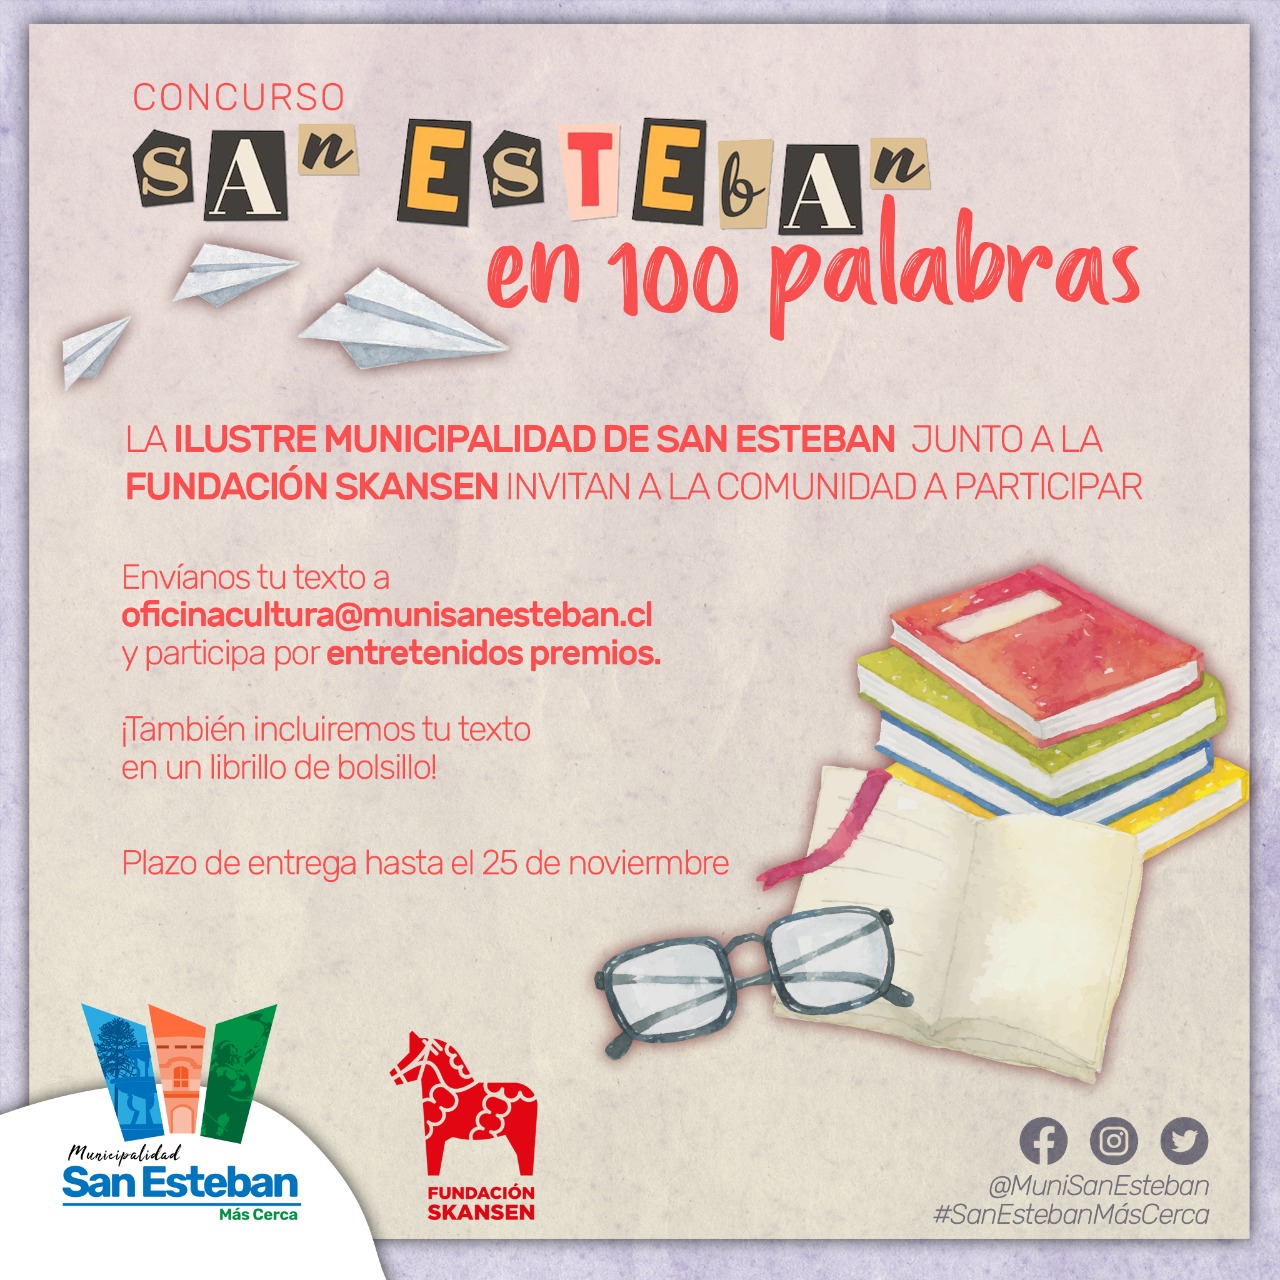 SAN ESTEBAN: Municipalidad y Fundación Skansen invitan a participar en entretenido concurso “San Esteban en 100 palabras”